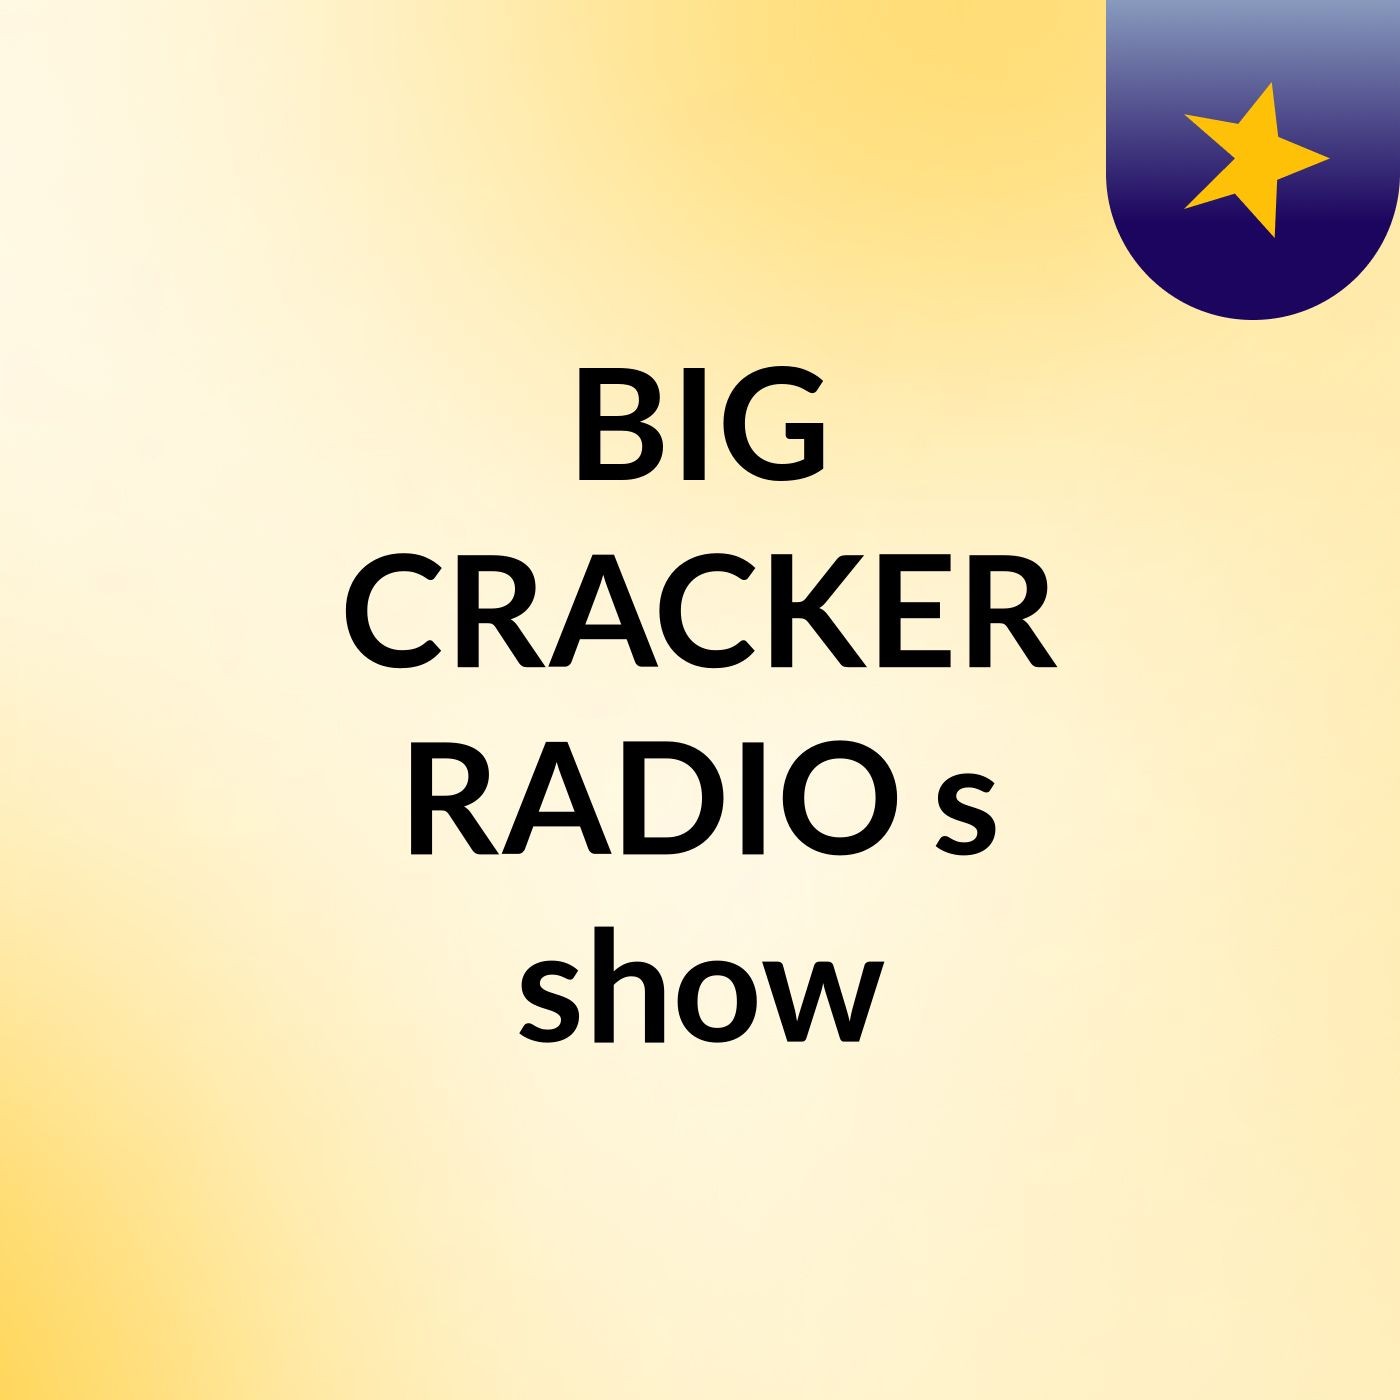 BIG CRACKER RADIO's show